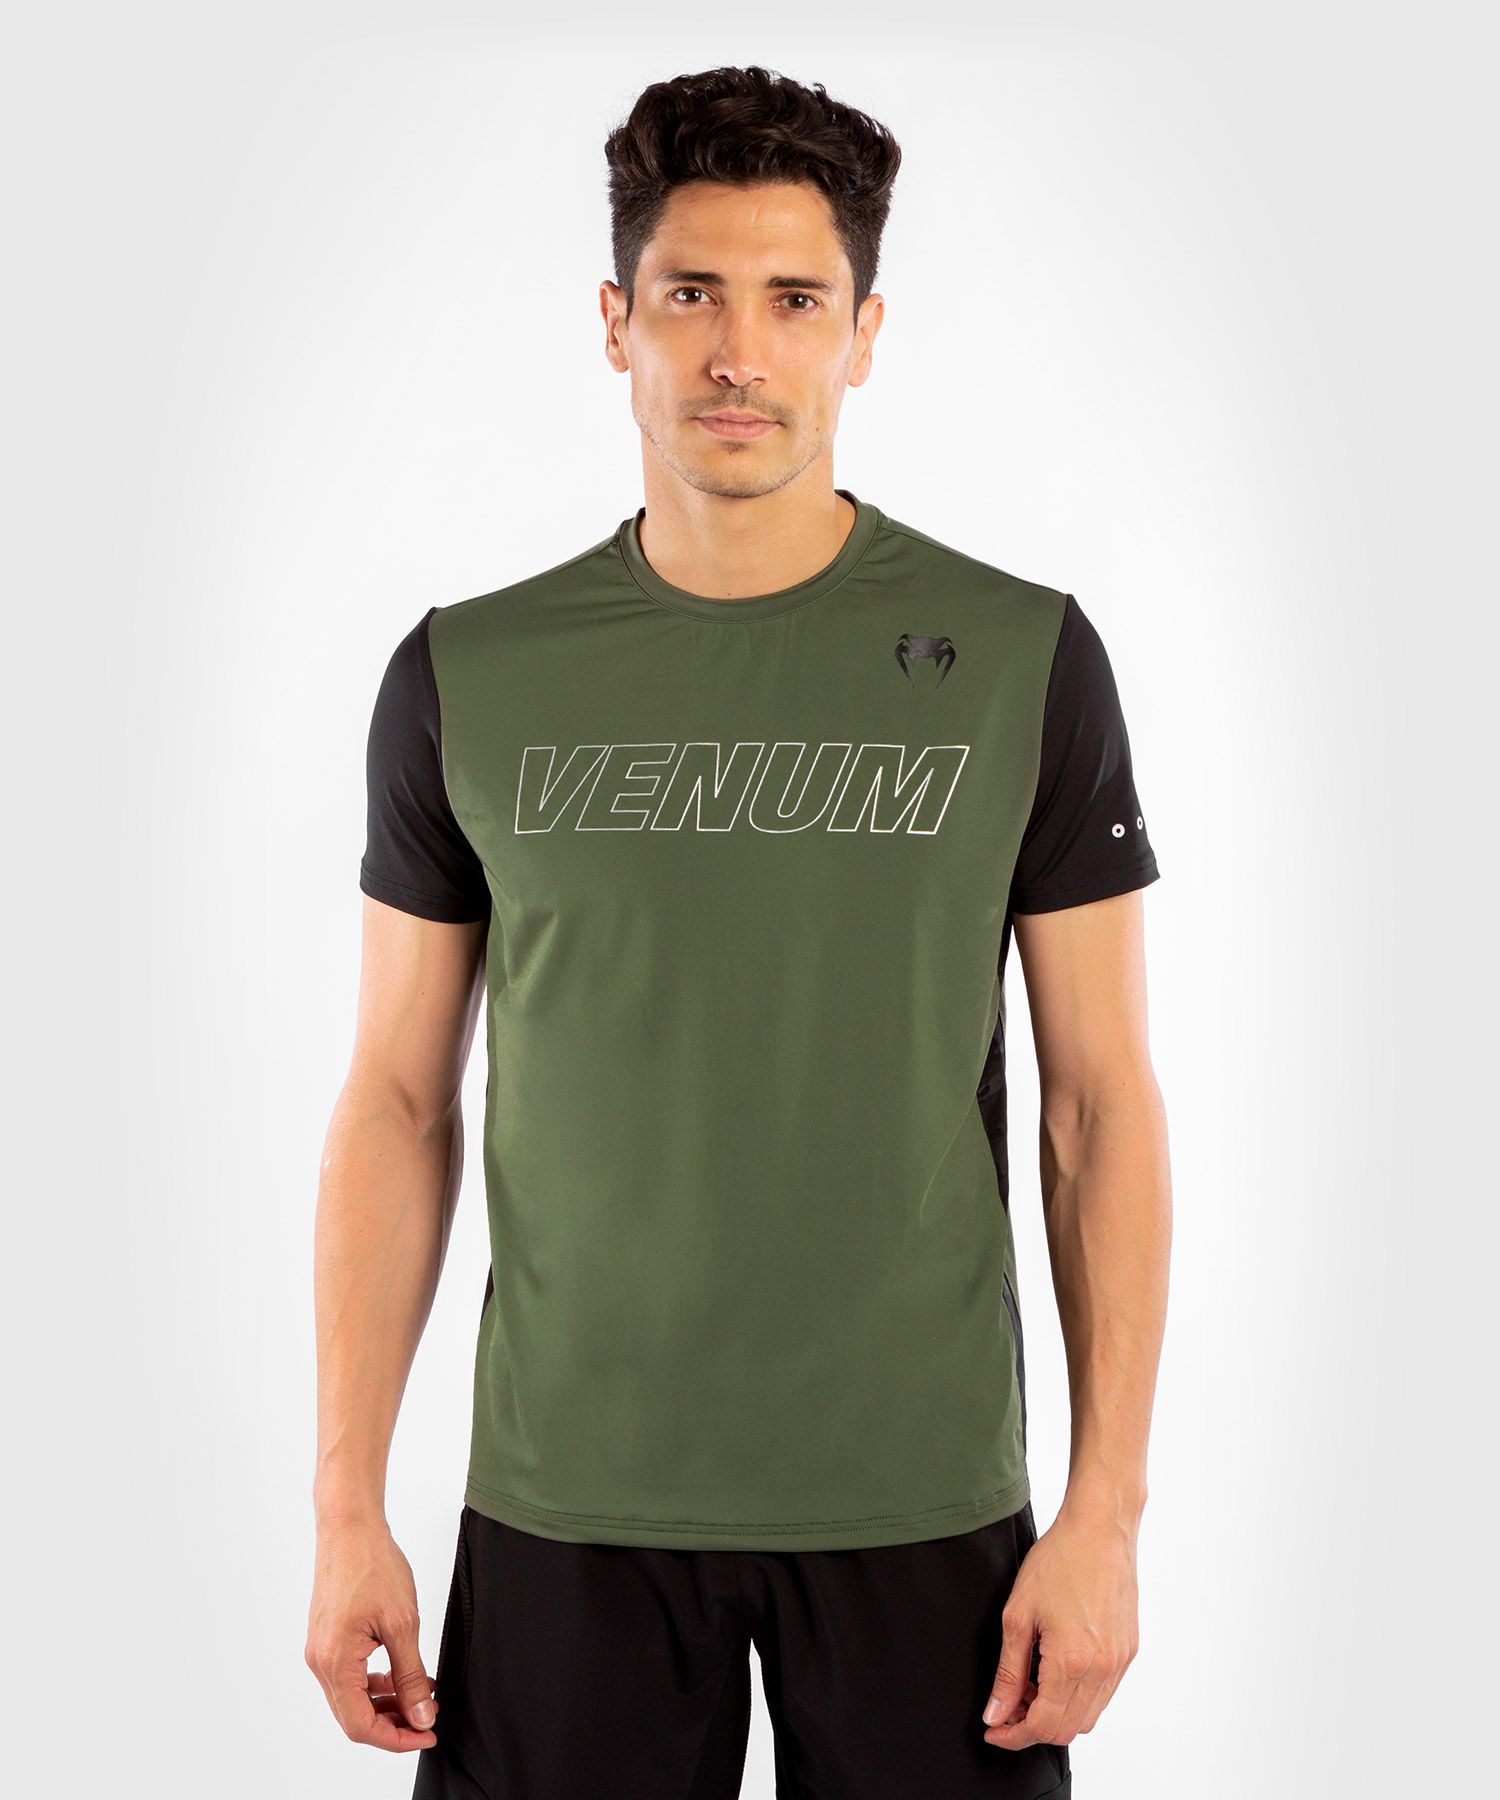 T-shirt Dry-Tech Venum Classic Evo - Kaki/Zilver